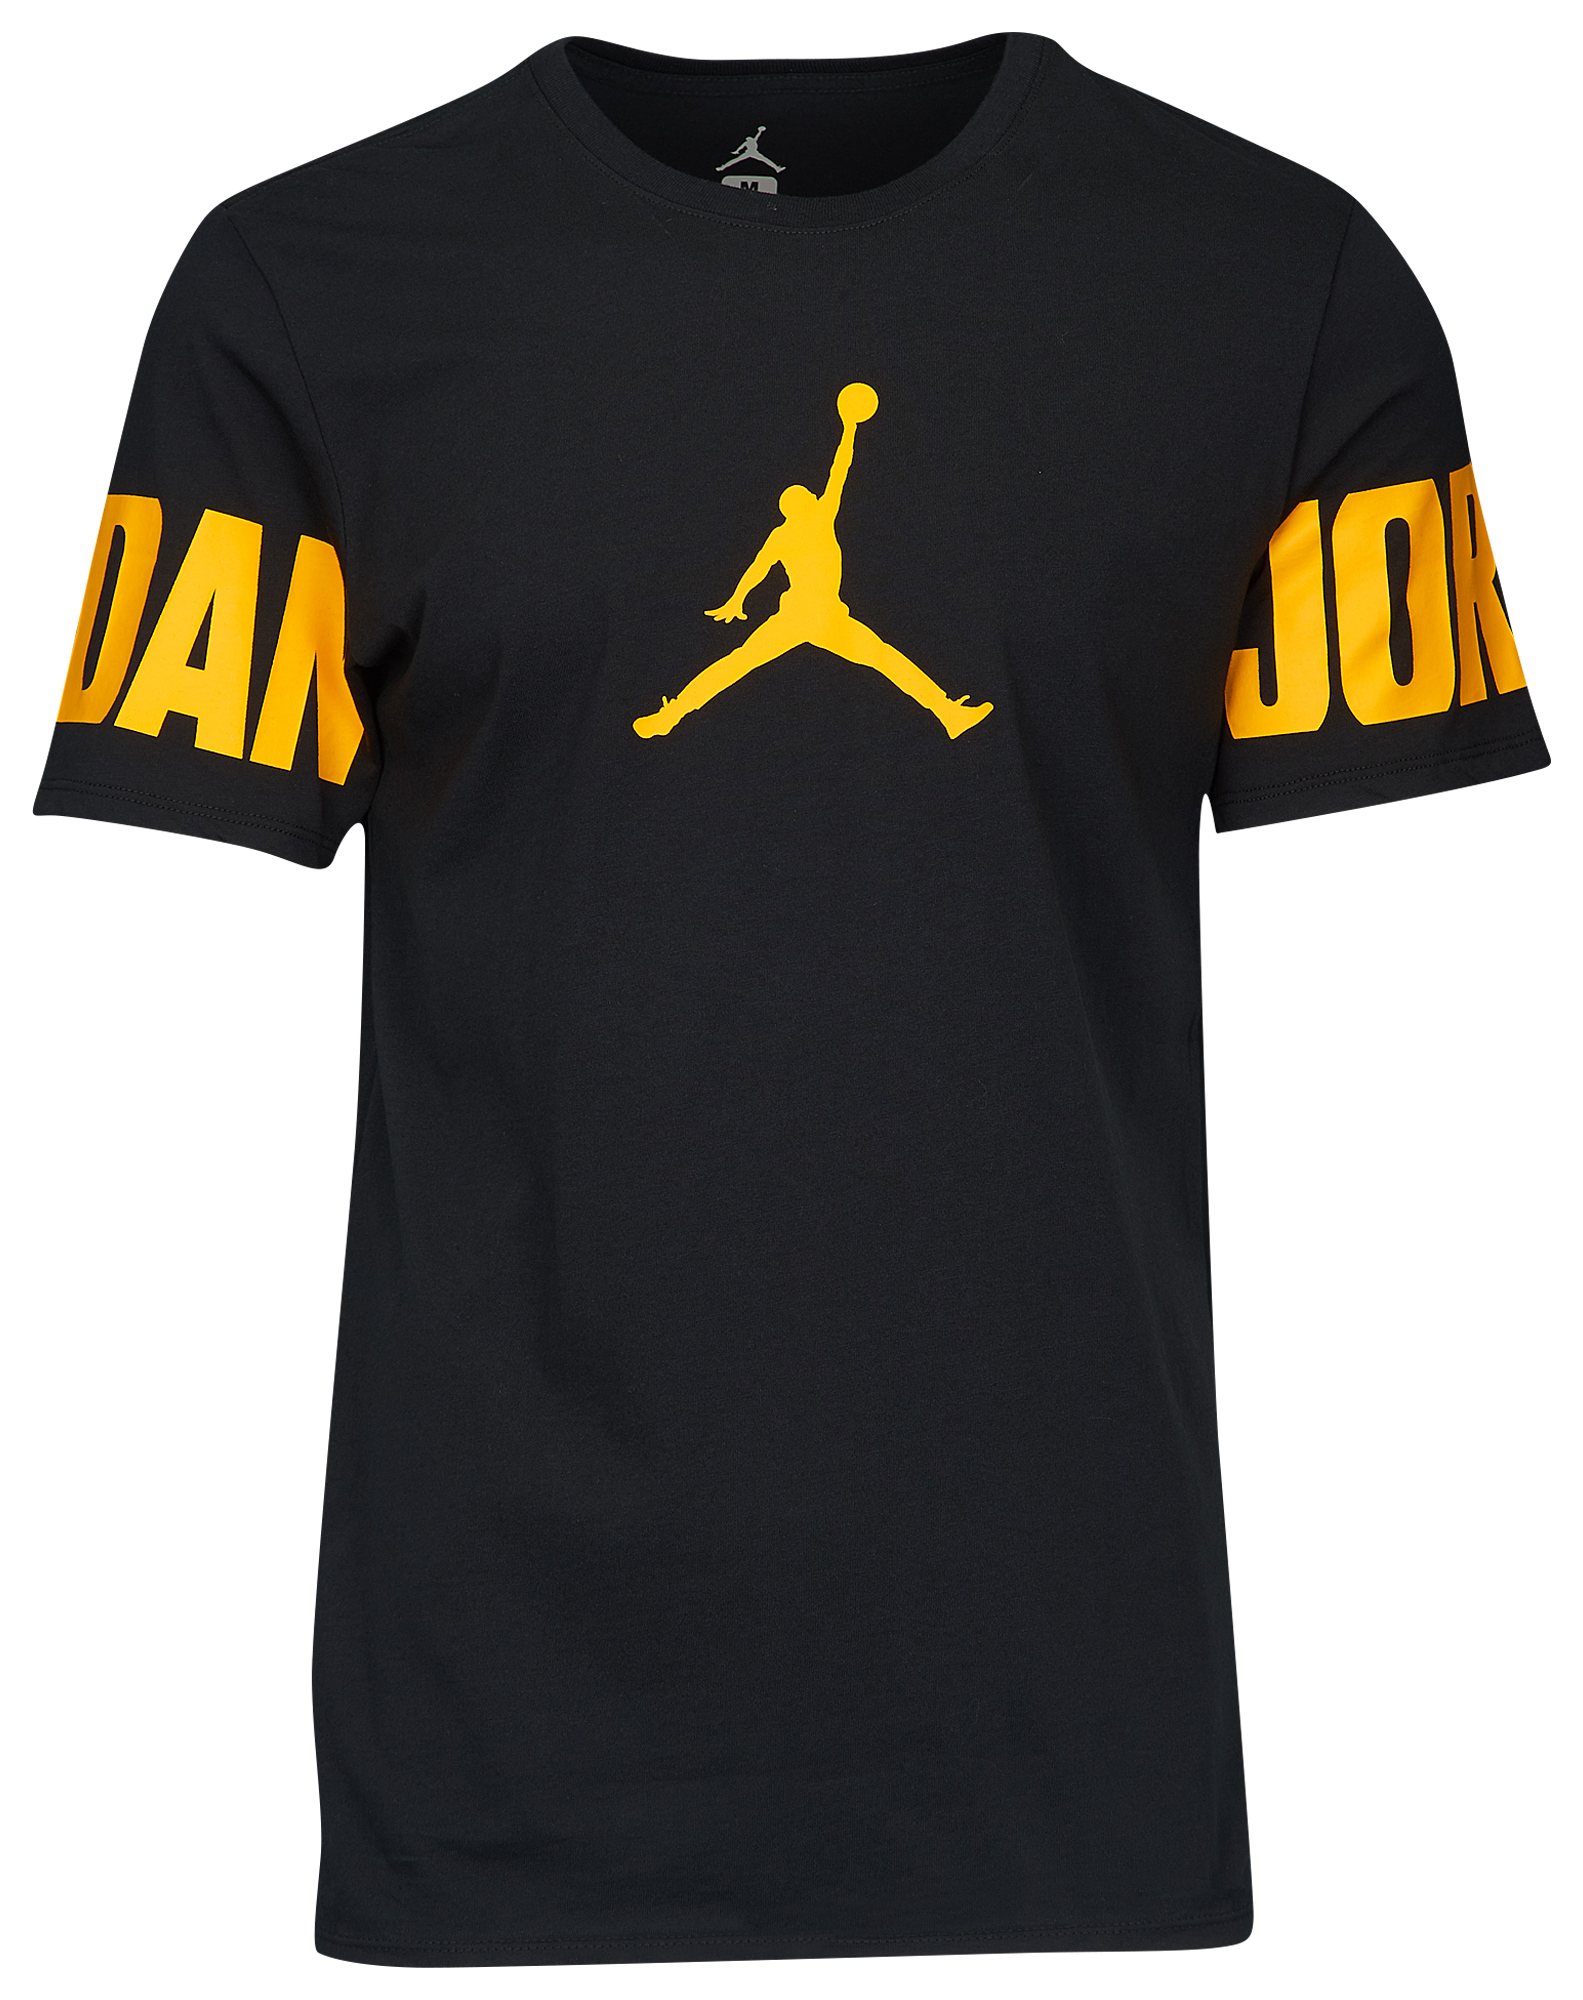 yellow jordan shirt womens